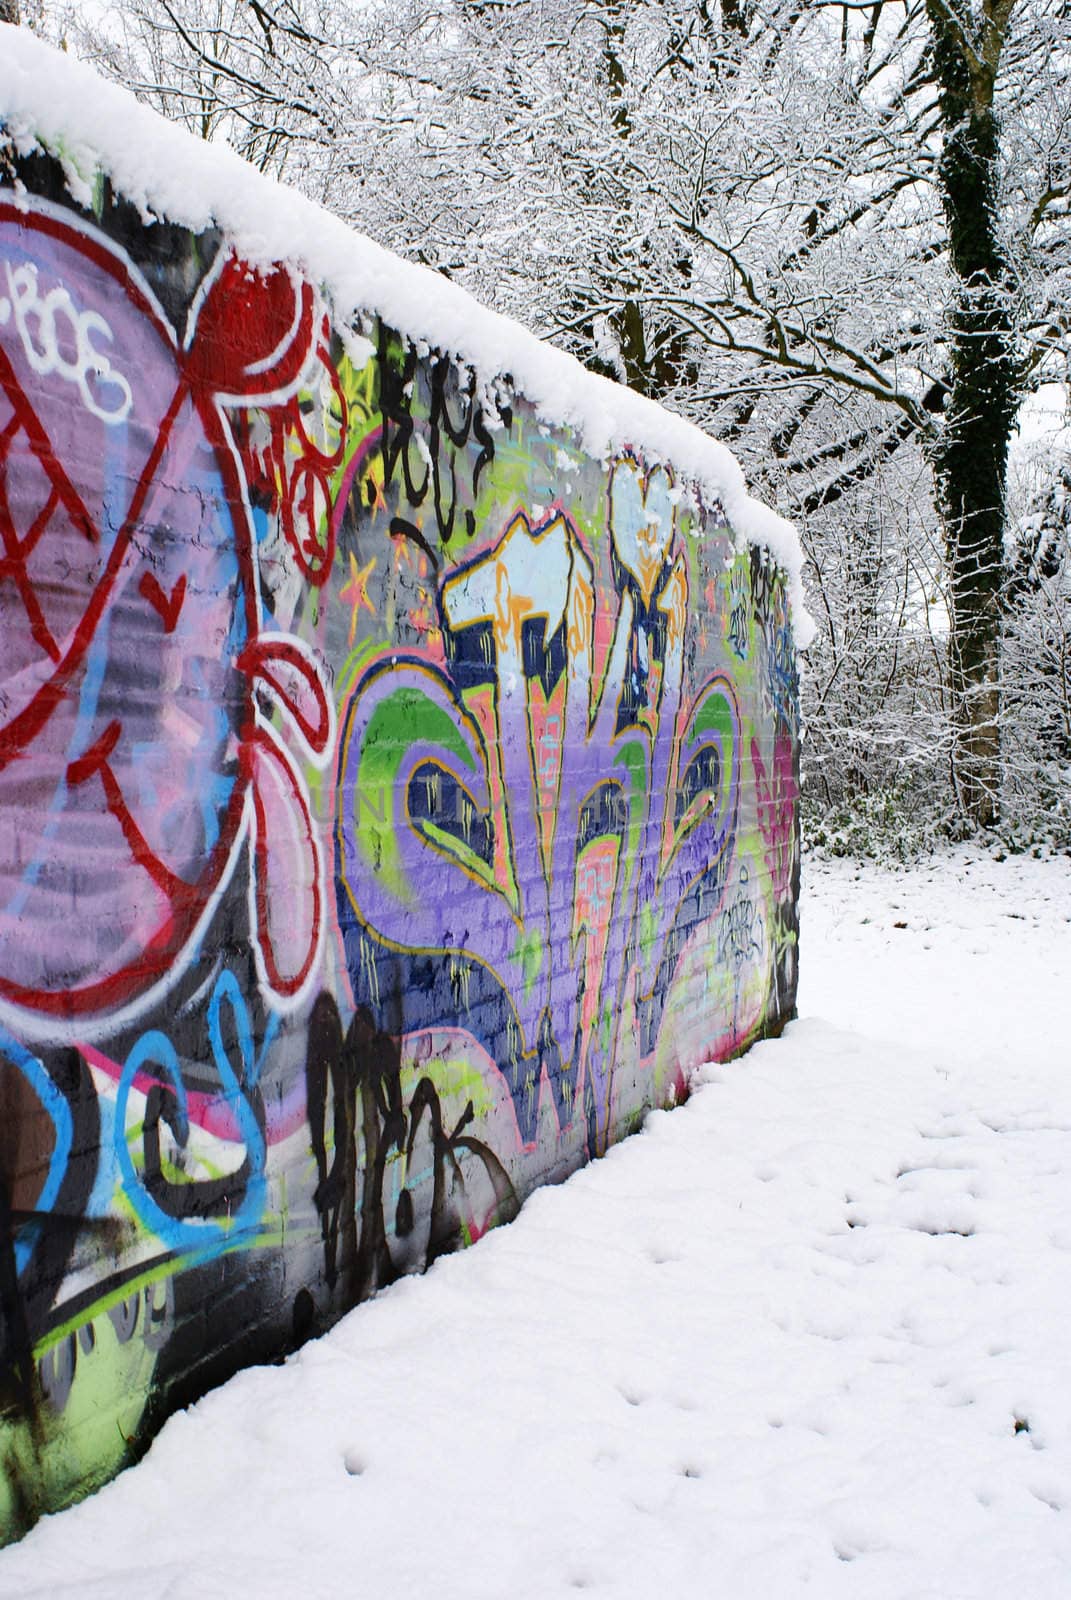 Graffiti in the snow. by SasPartout